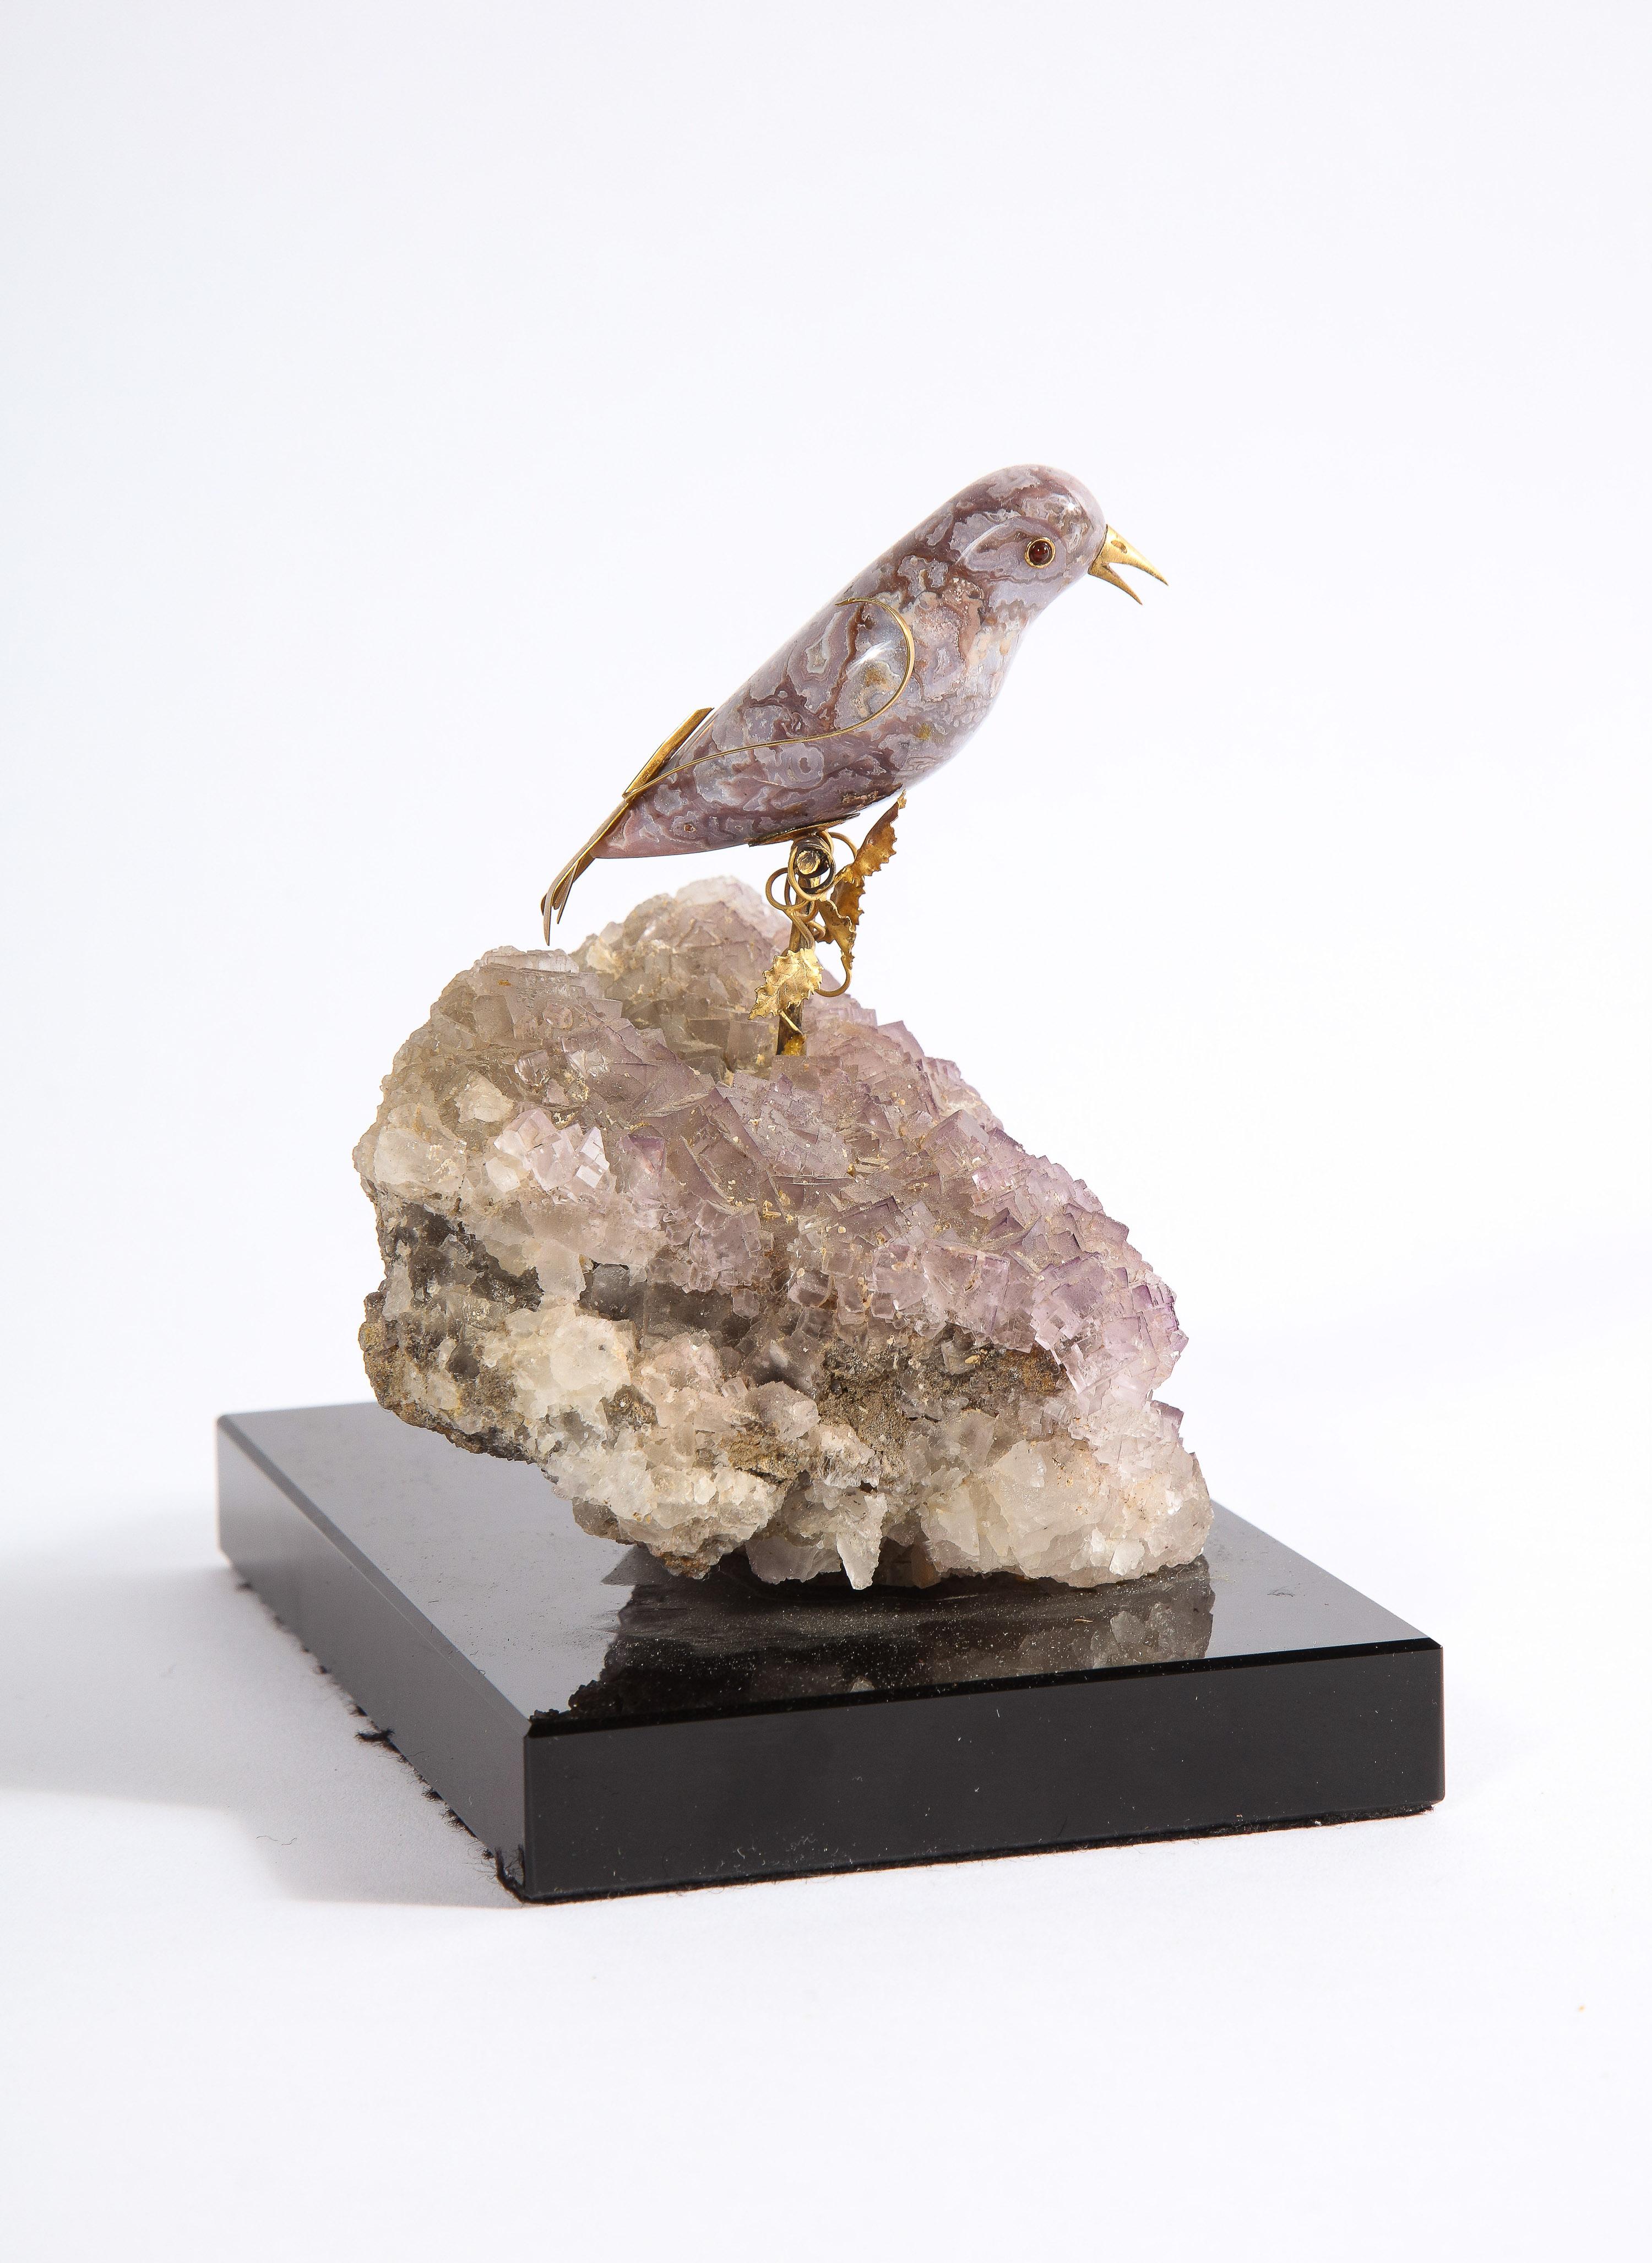 14k Gold Mounted Agate Bird on Fluorite Stone, Mounted on Black Glass 6